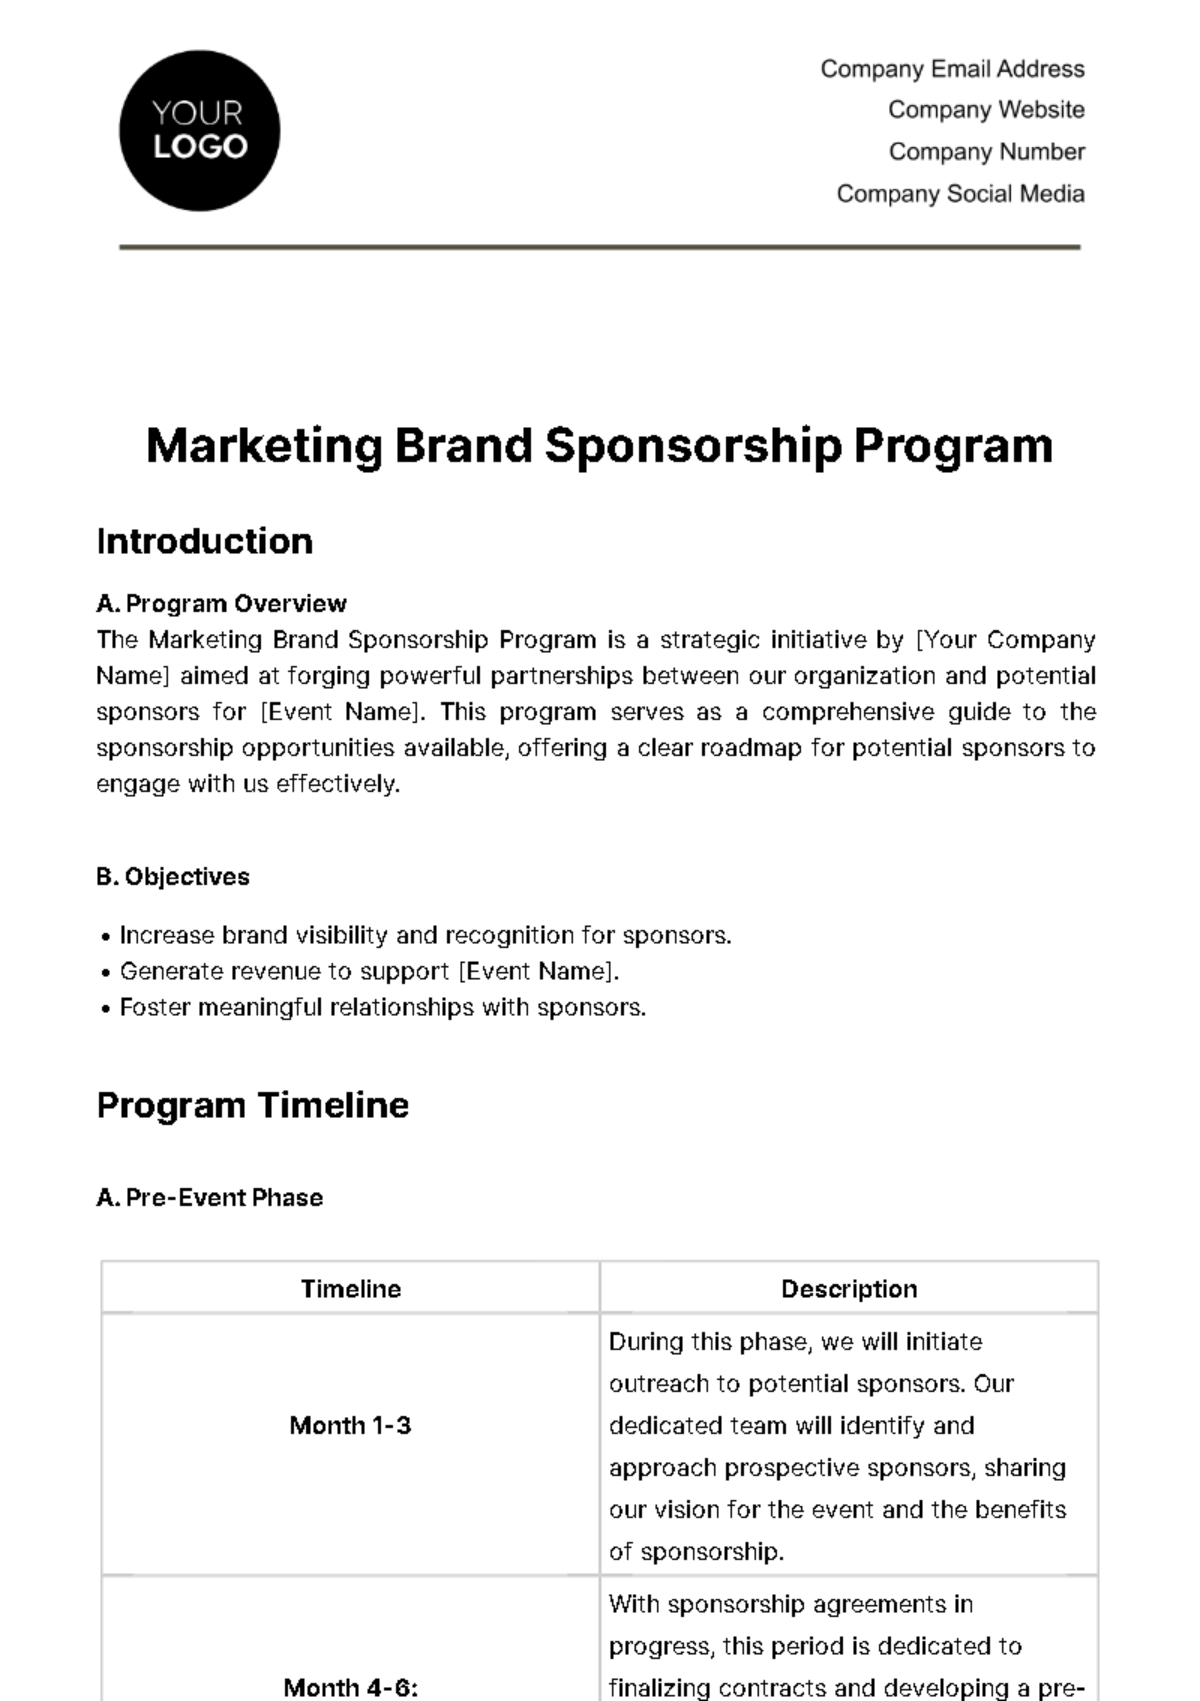 Free Marketing Brand Sponsorship Program Template